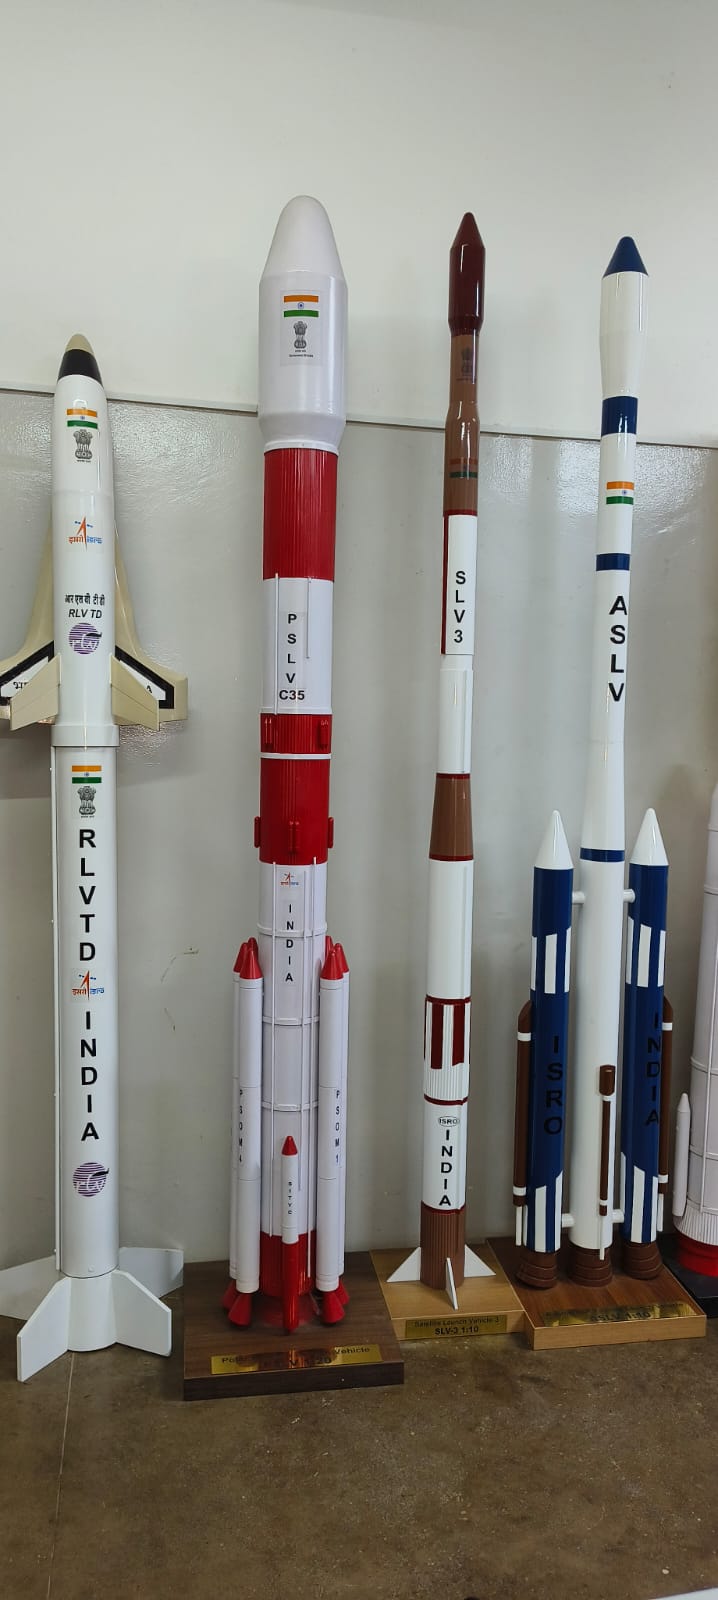 ISRO rocket models